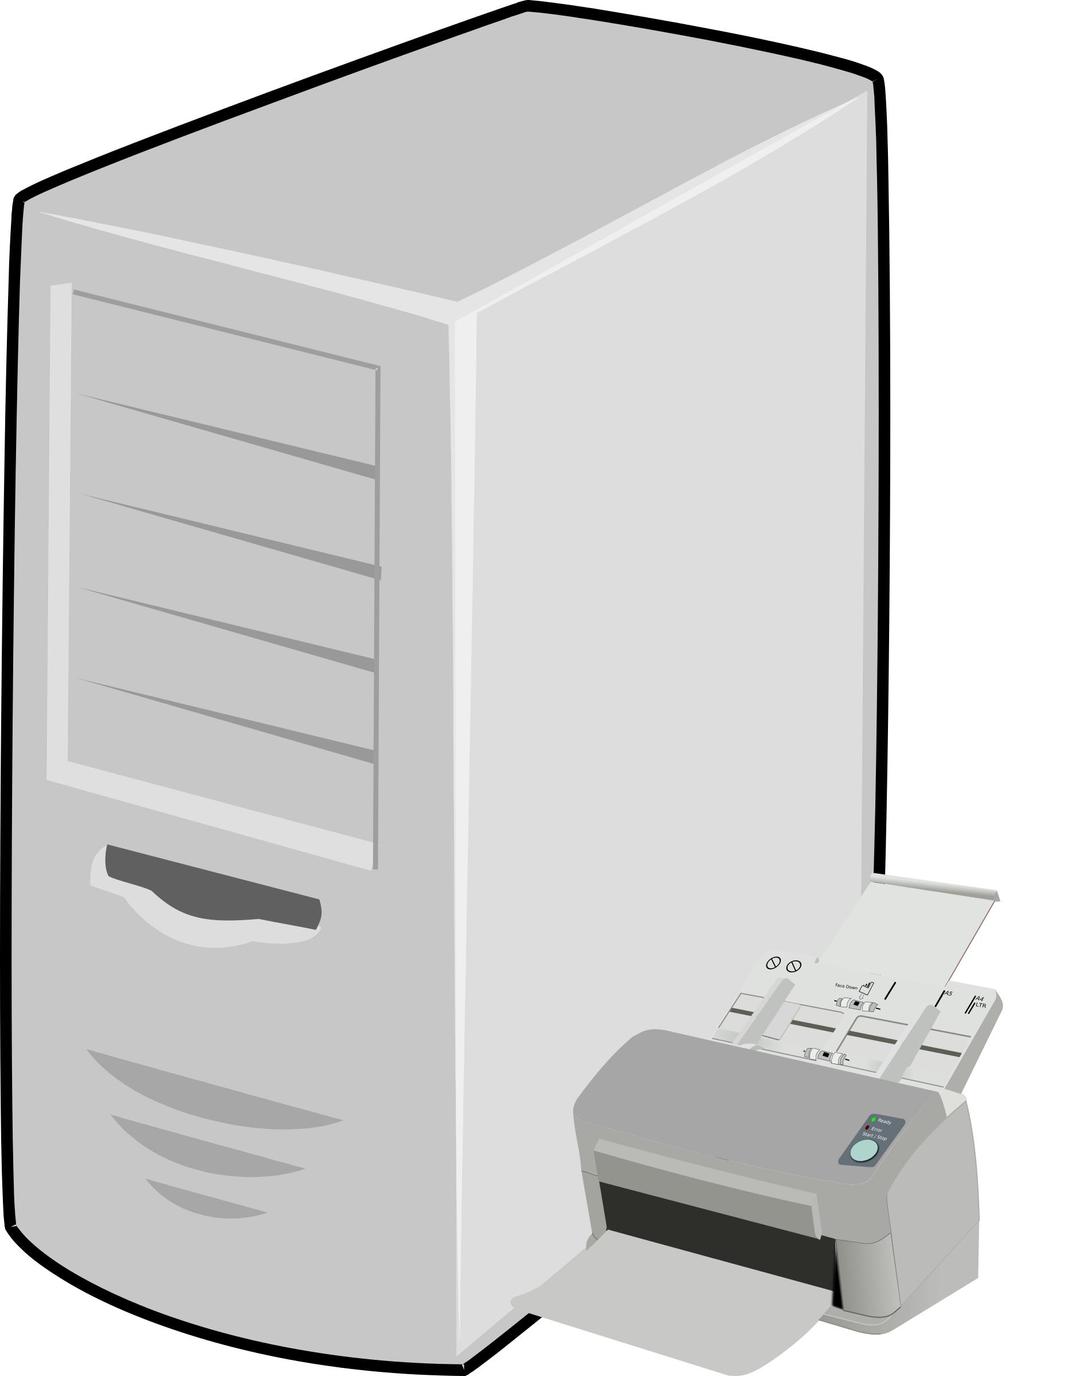 Fax Server png transparent